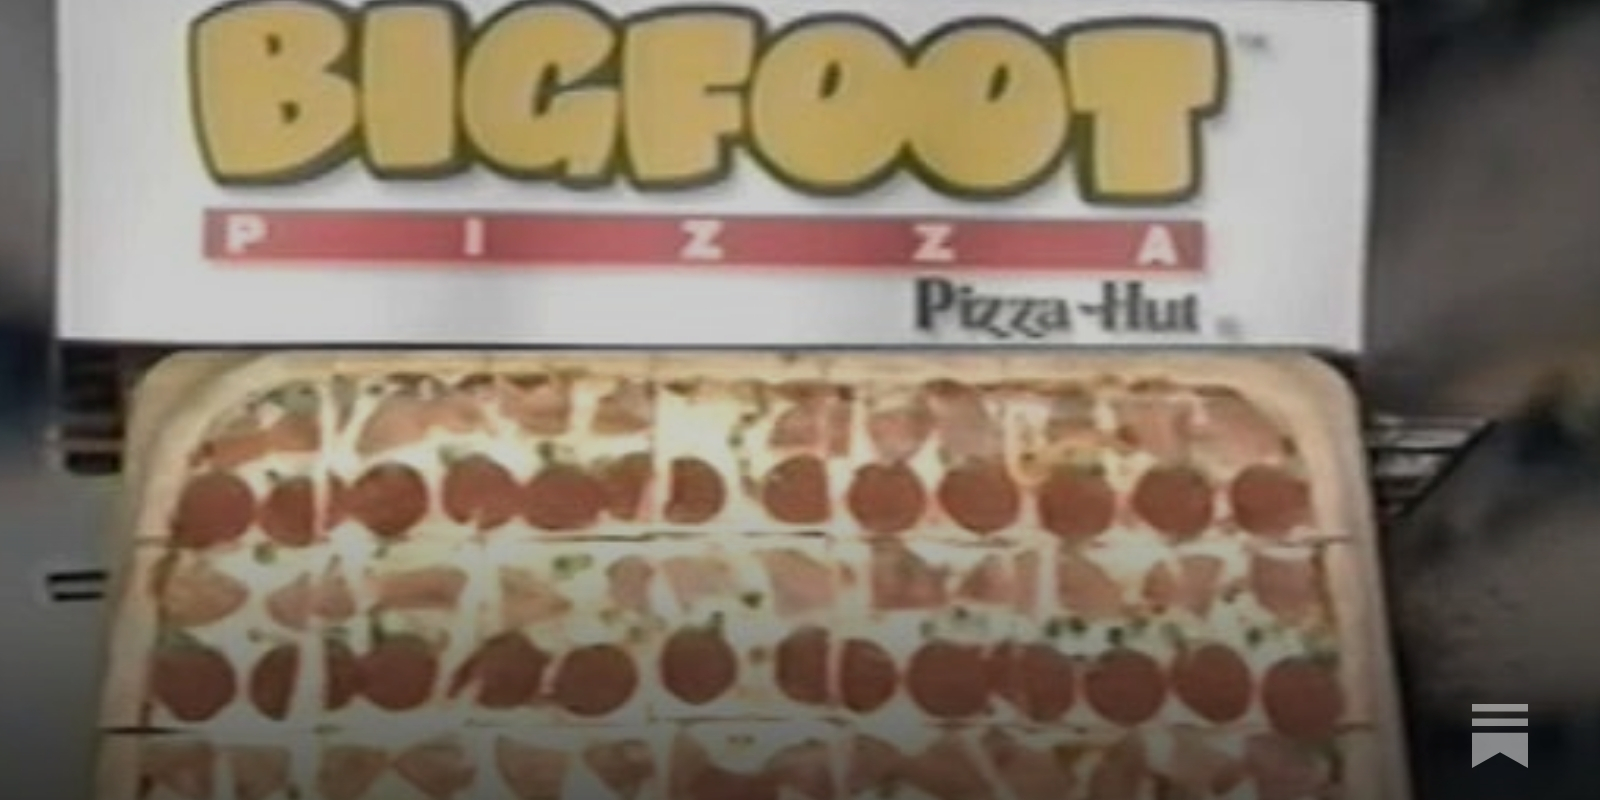 Pizza Hut should bring back the Bigfoot pizza. Just sayin